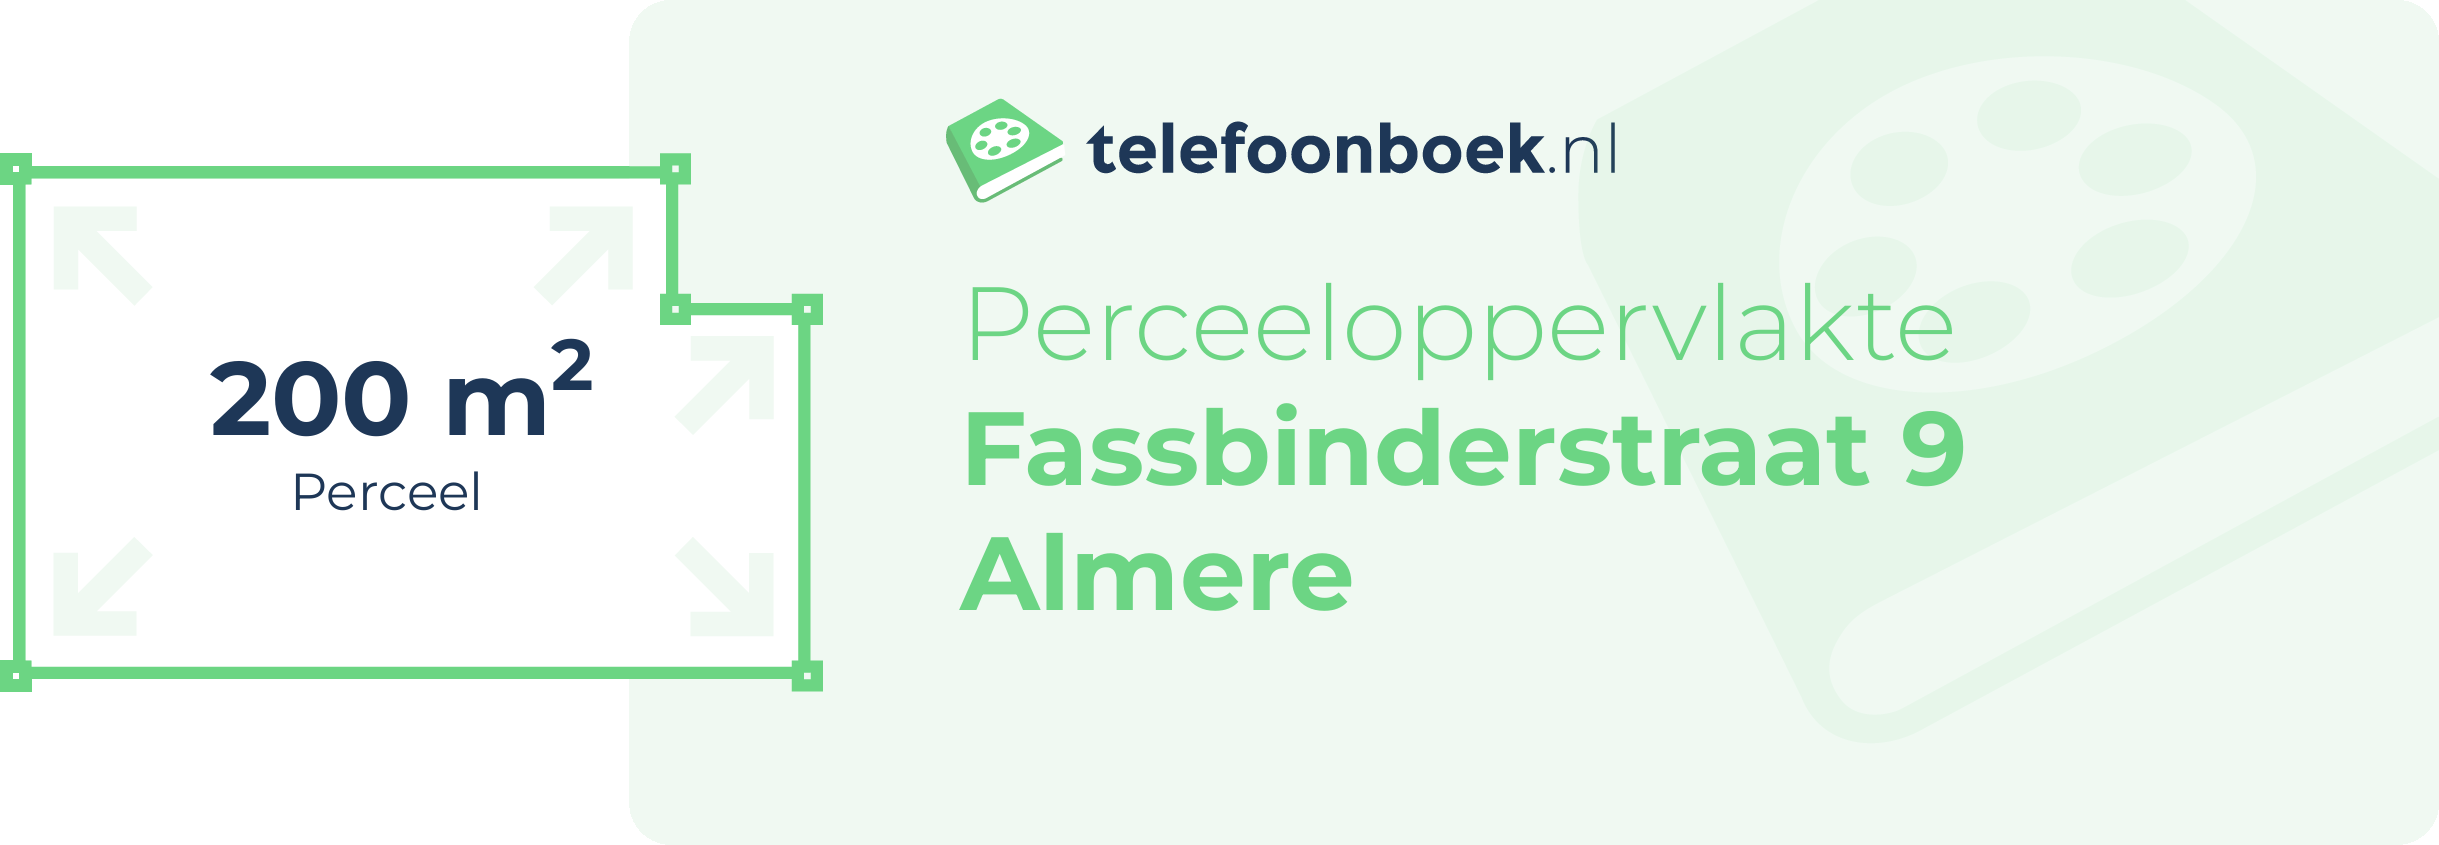 Perceeloppervlakte Fassbinderstraat 9 Almere